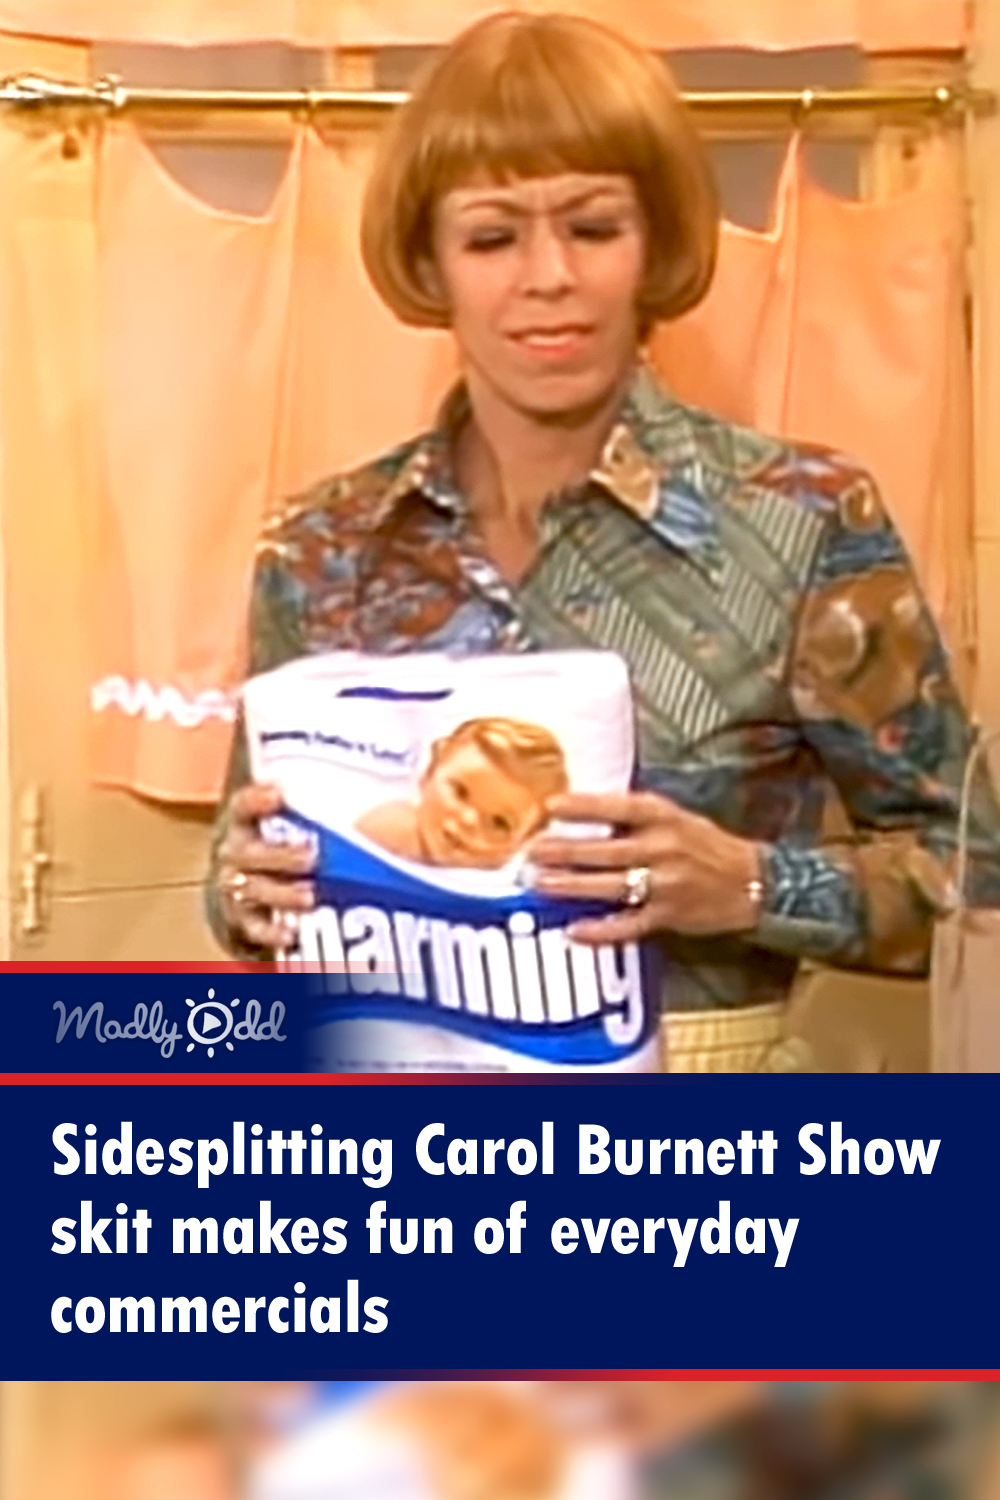 Sidesplitting Carol Burnett Show skit makes fun of everyday commercials